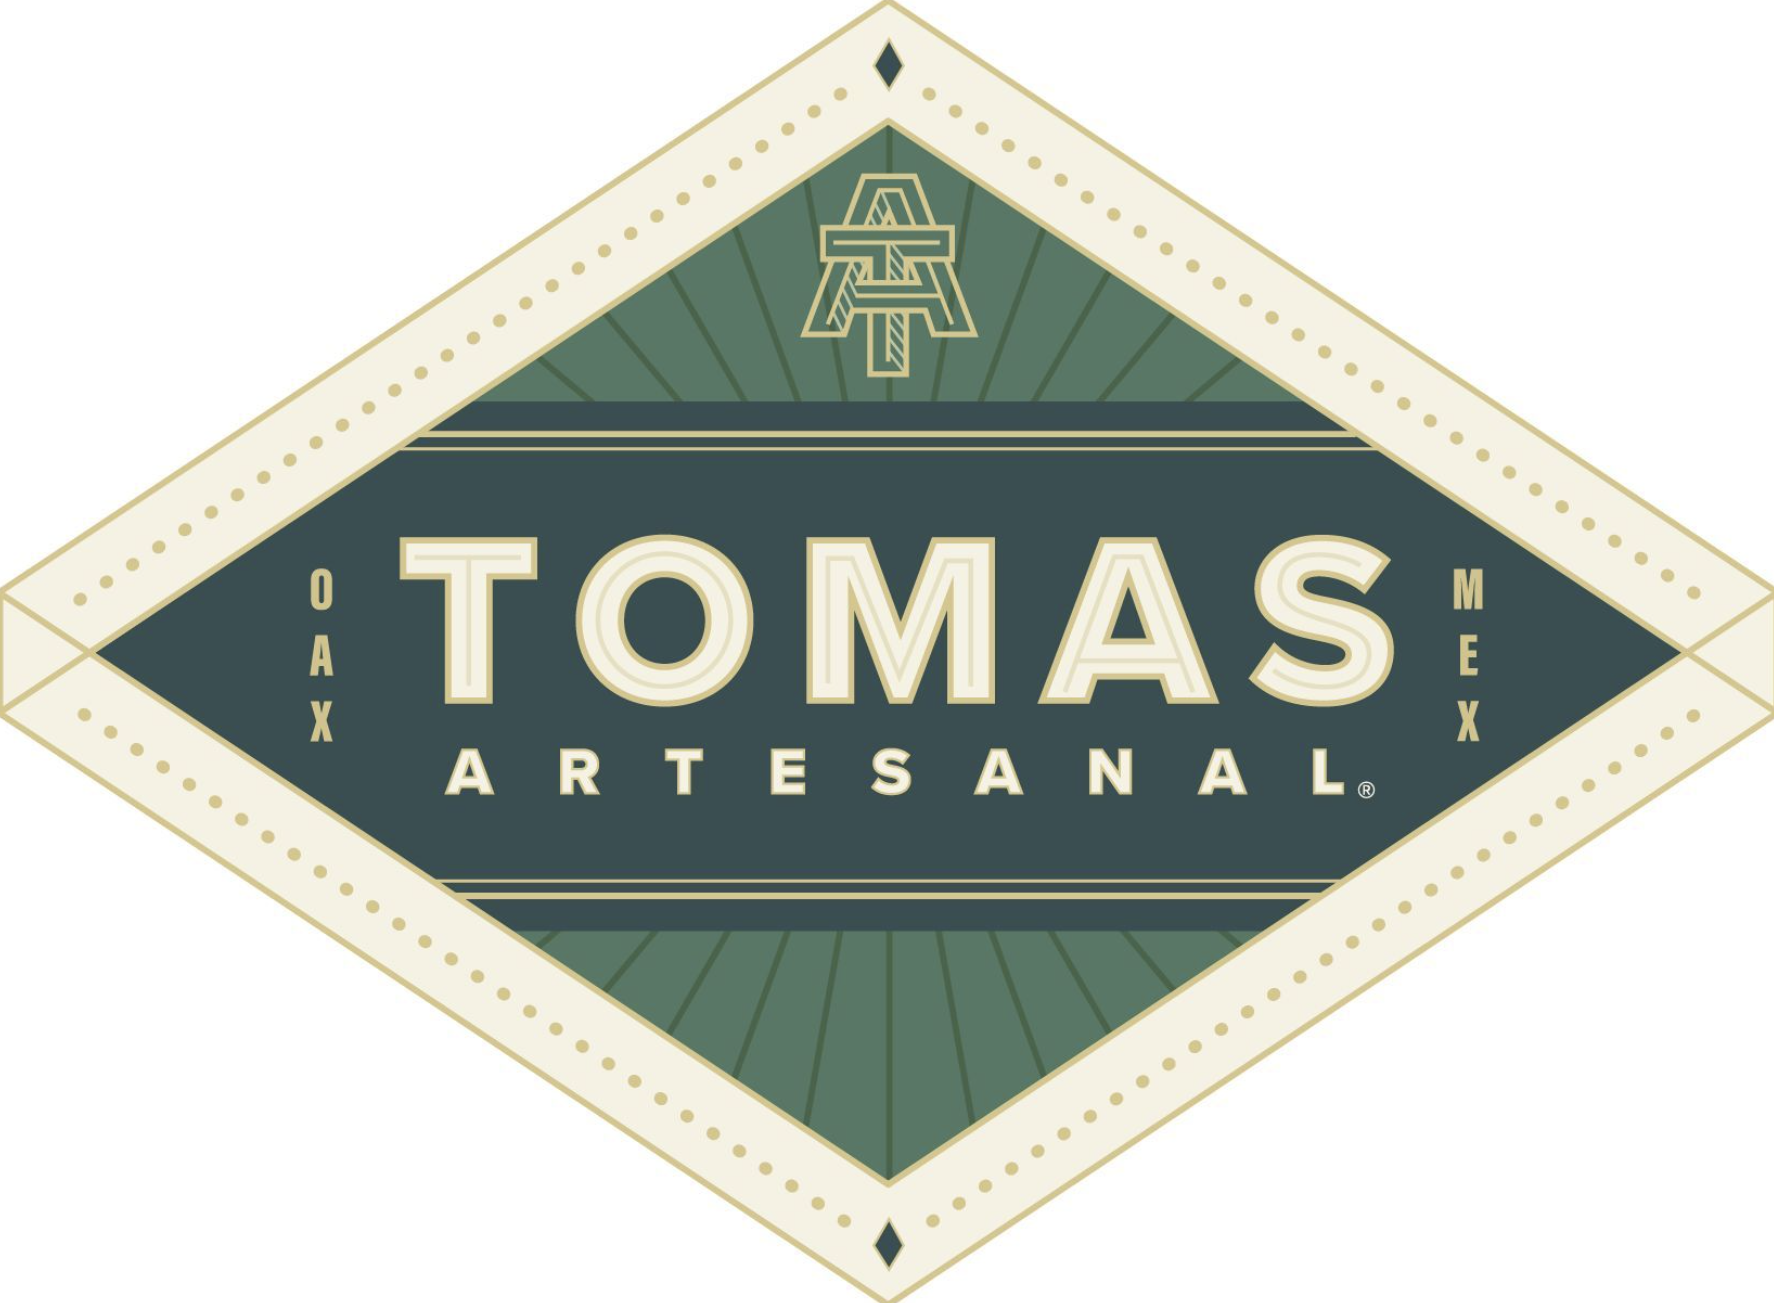 Tomas Artesanal